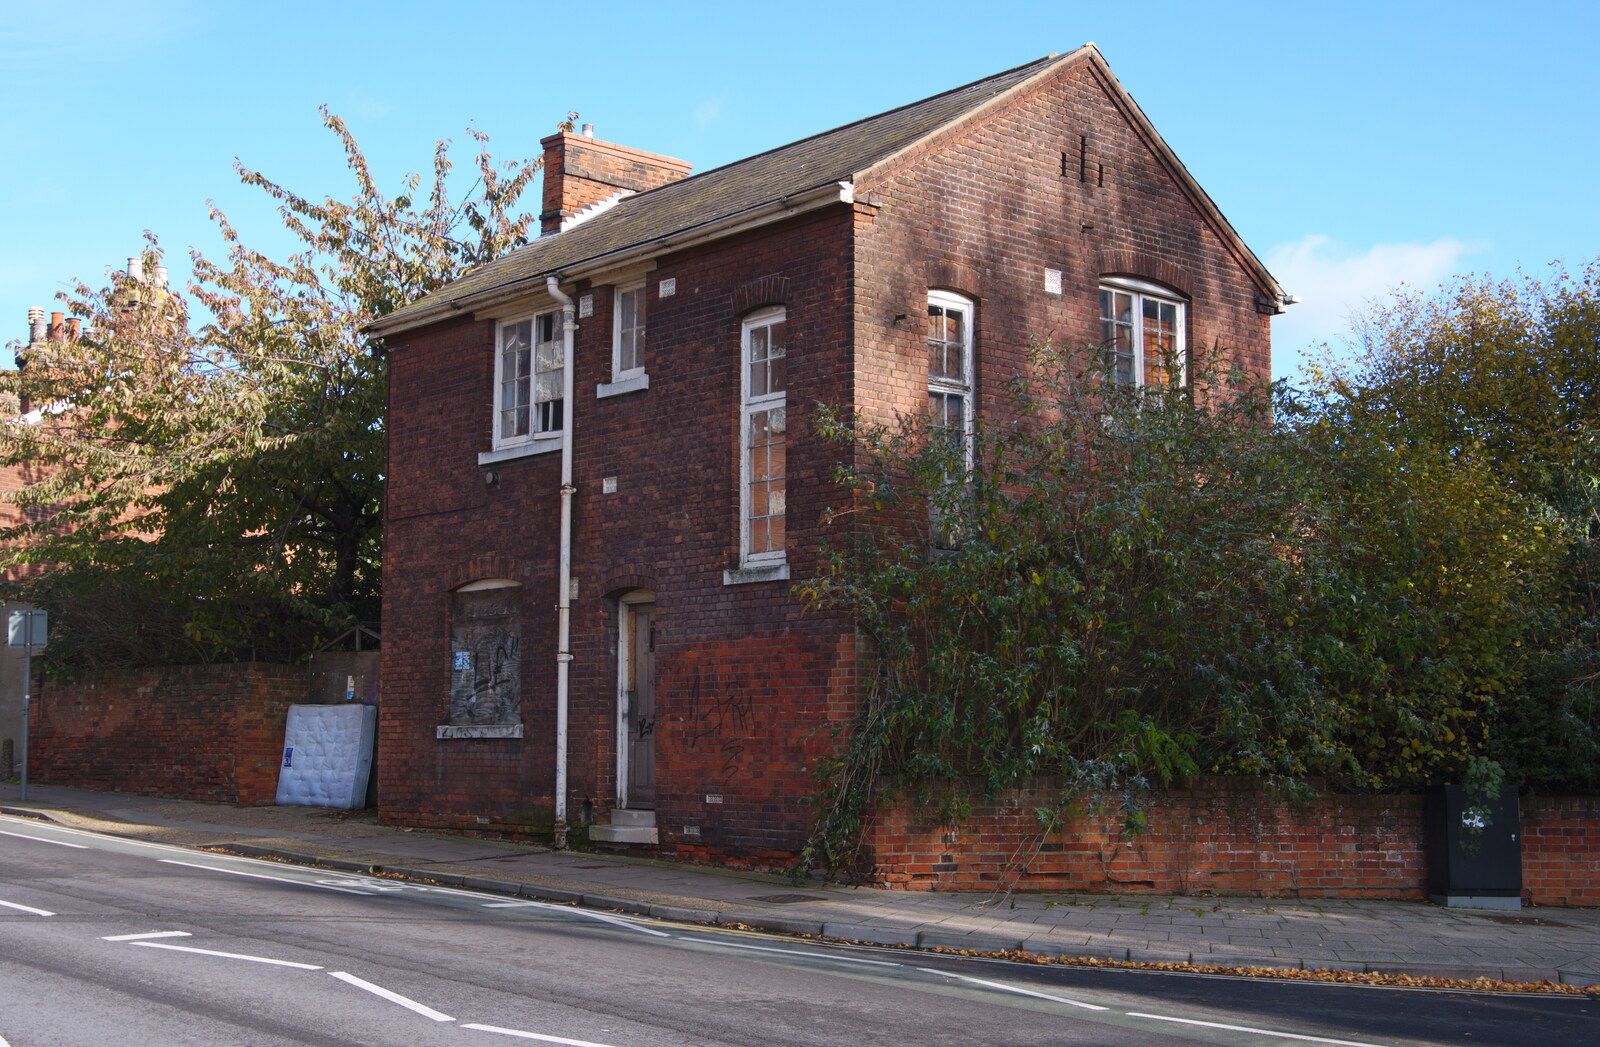 A derelict house near Rope Walk from Exam Day Dereliction, Ipswich, Suffolk - 13th November 2019